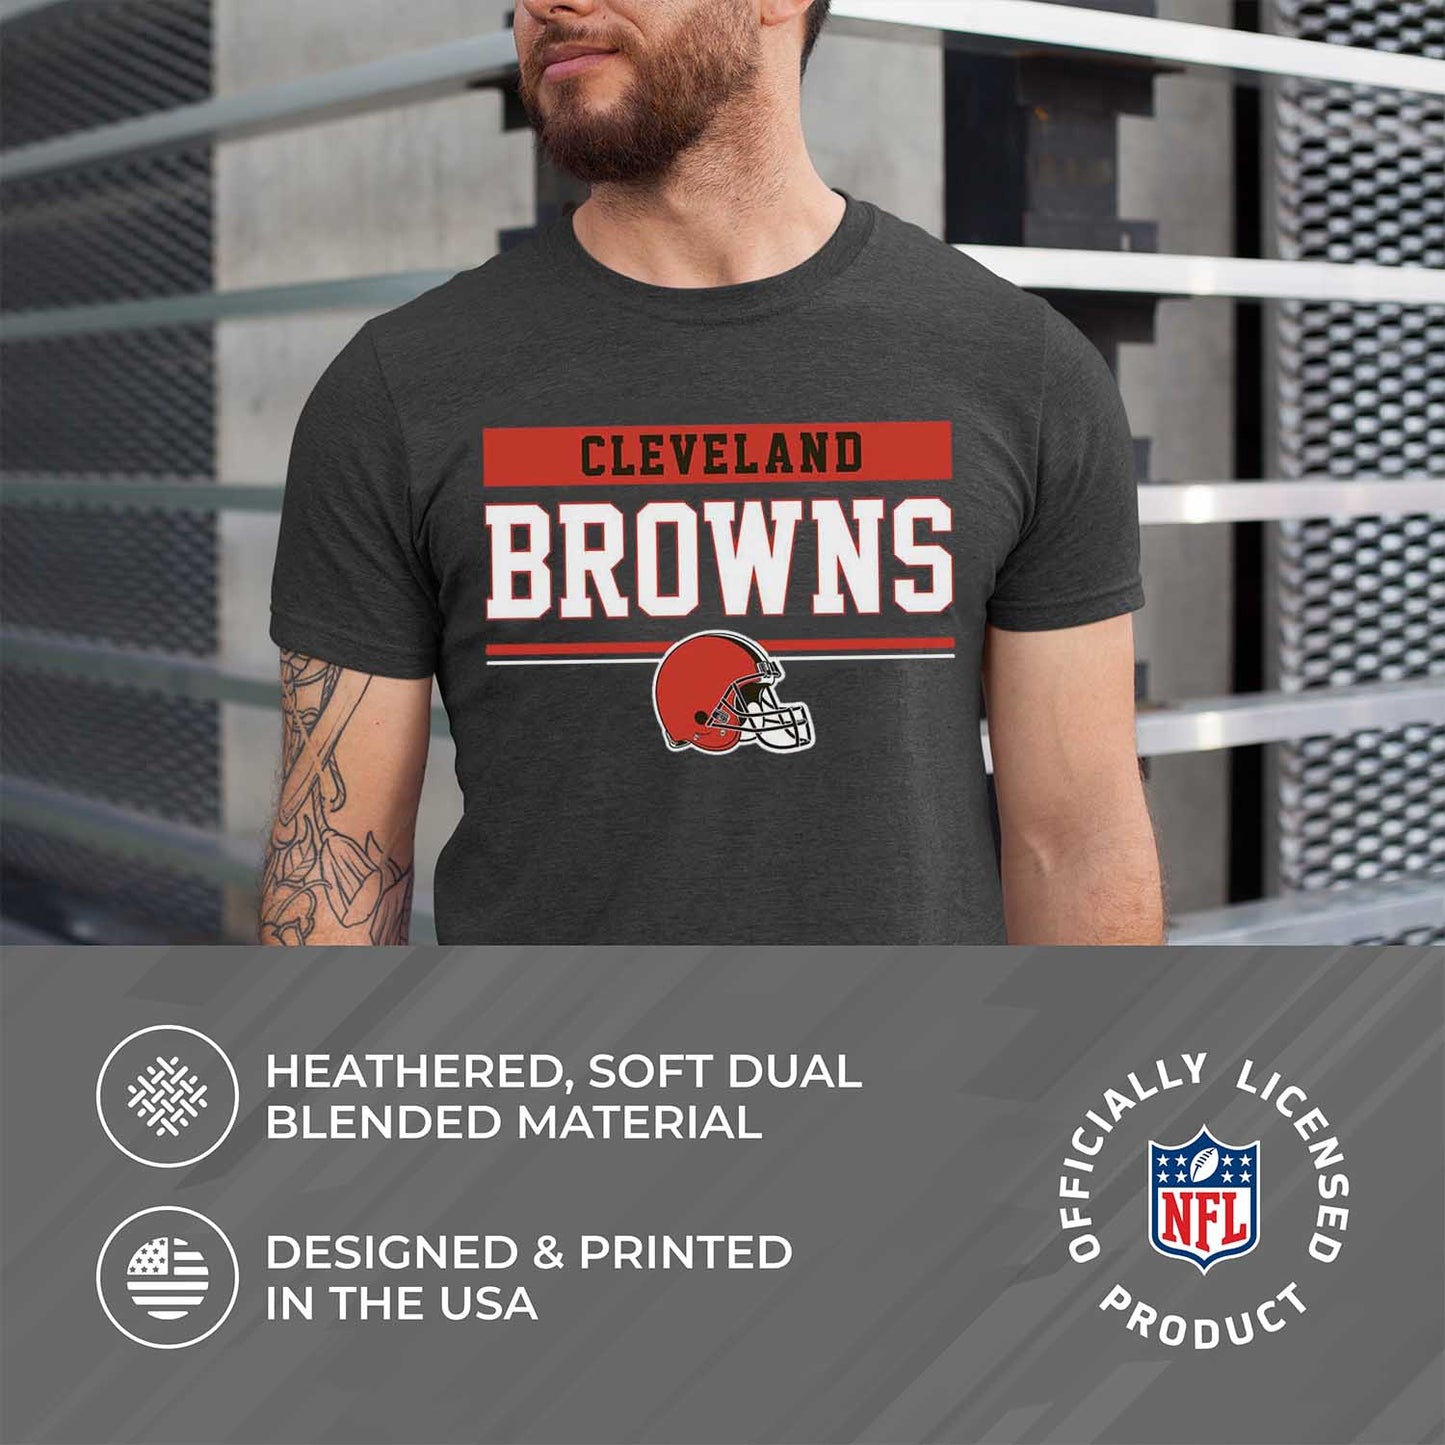 Cleveland Browns NFL Adult Team Block Tagless T-Shirt - Charcoal